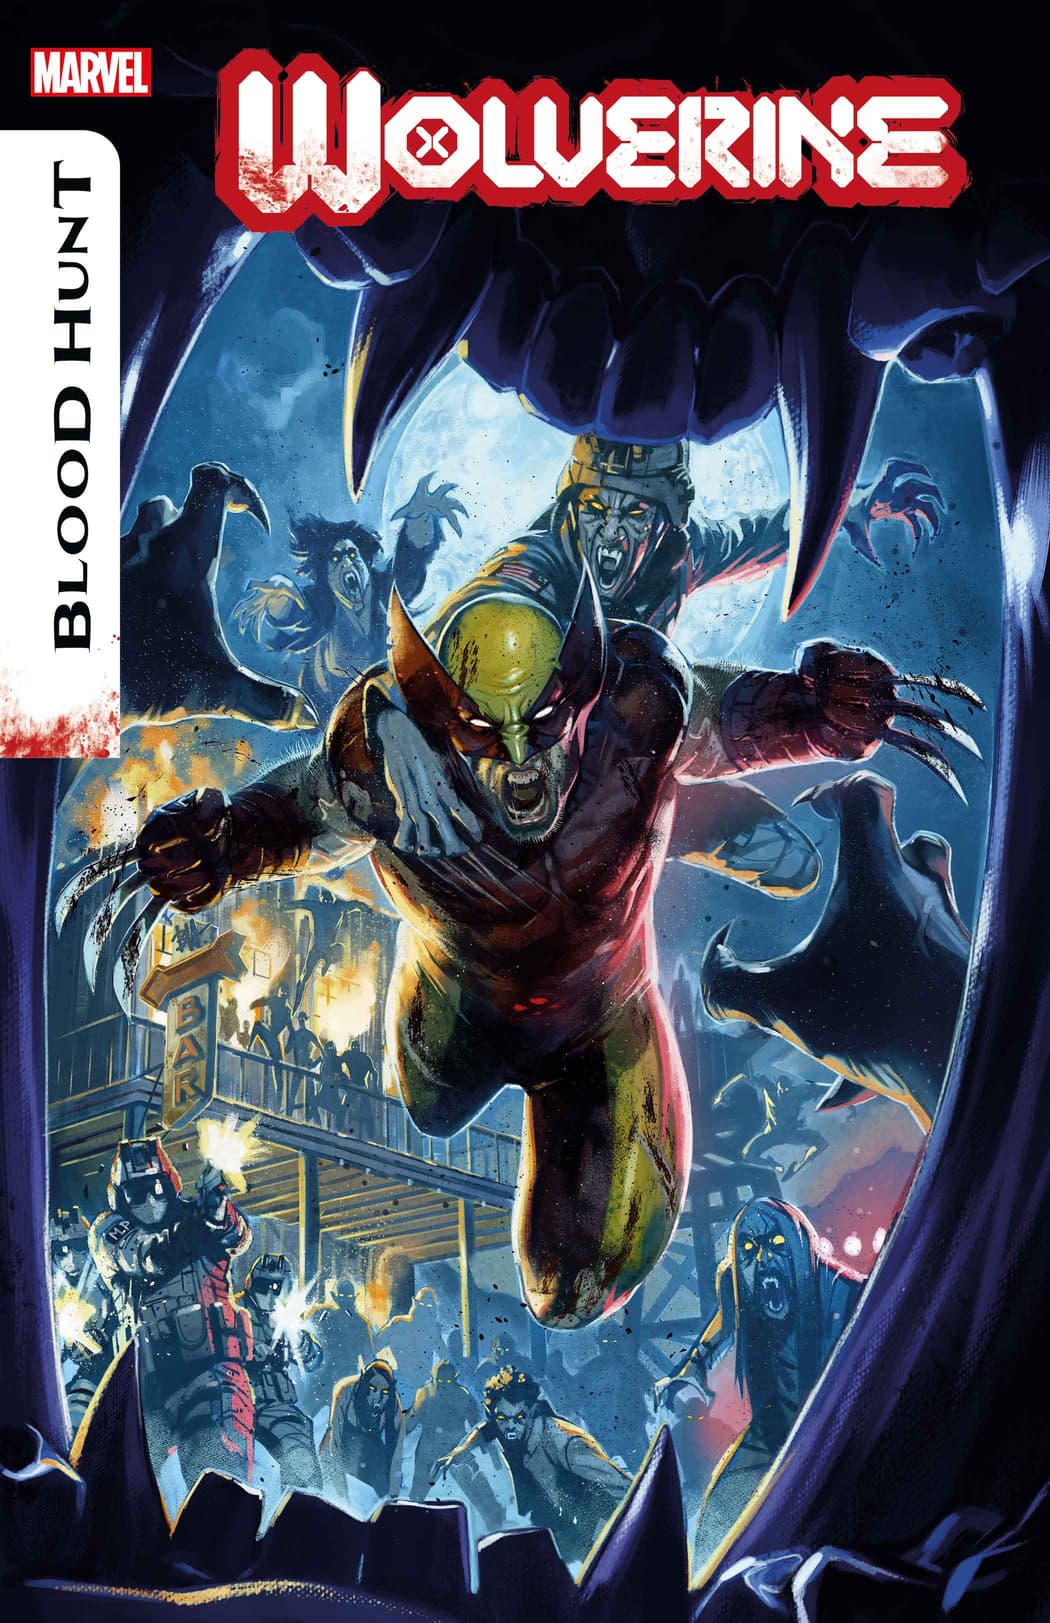 Wolverine: Blood Hunt #1 cover art